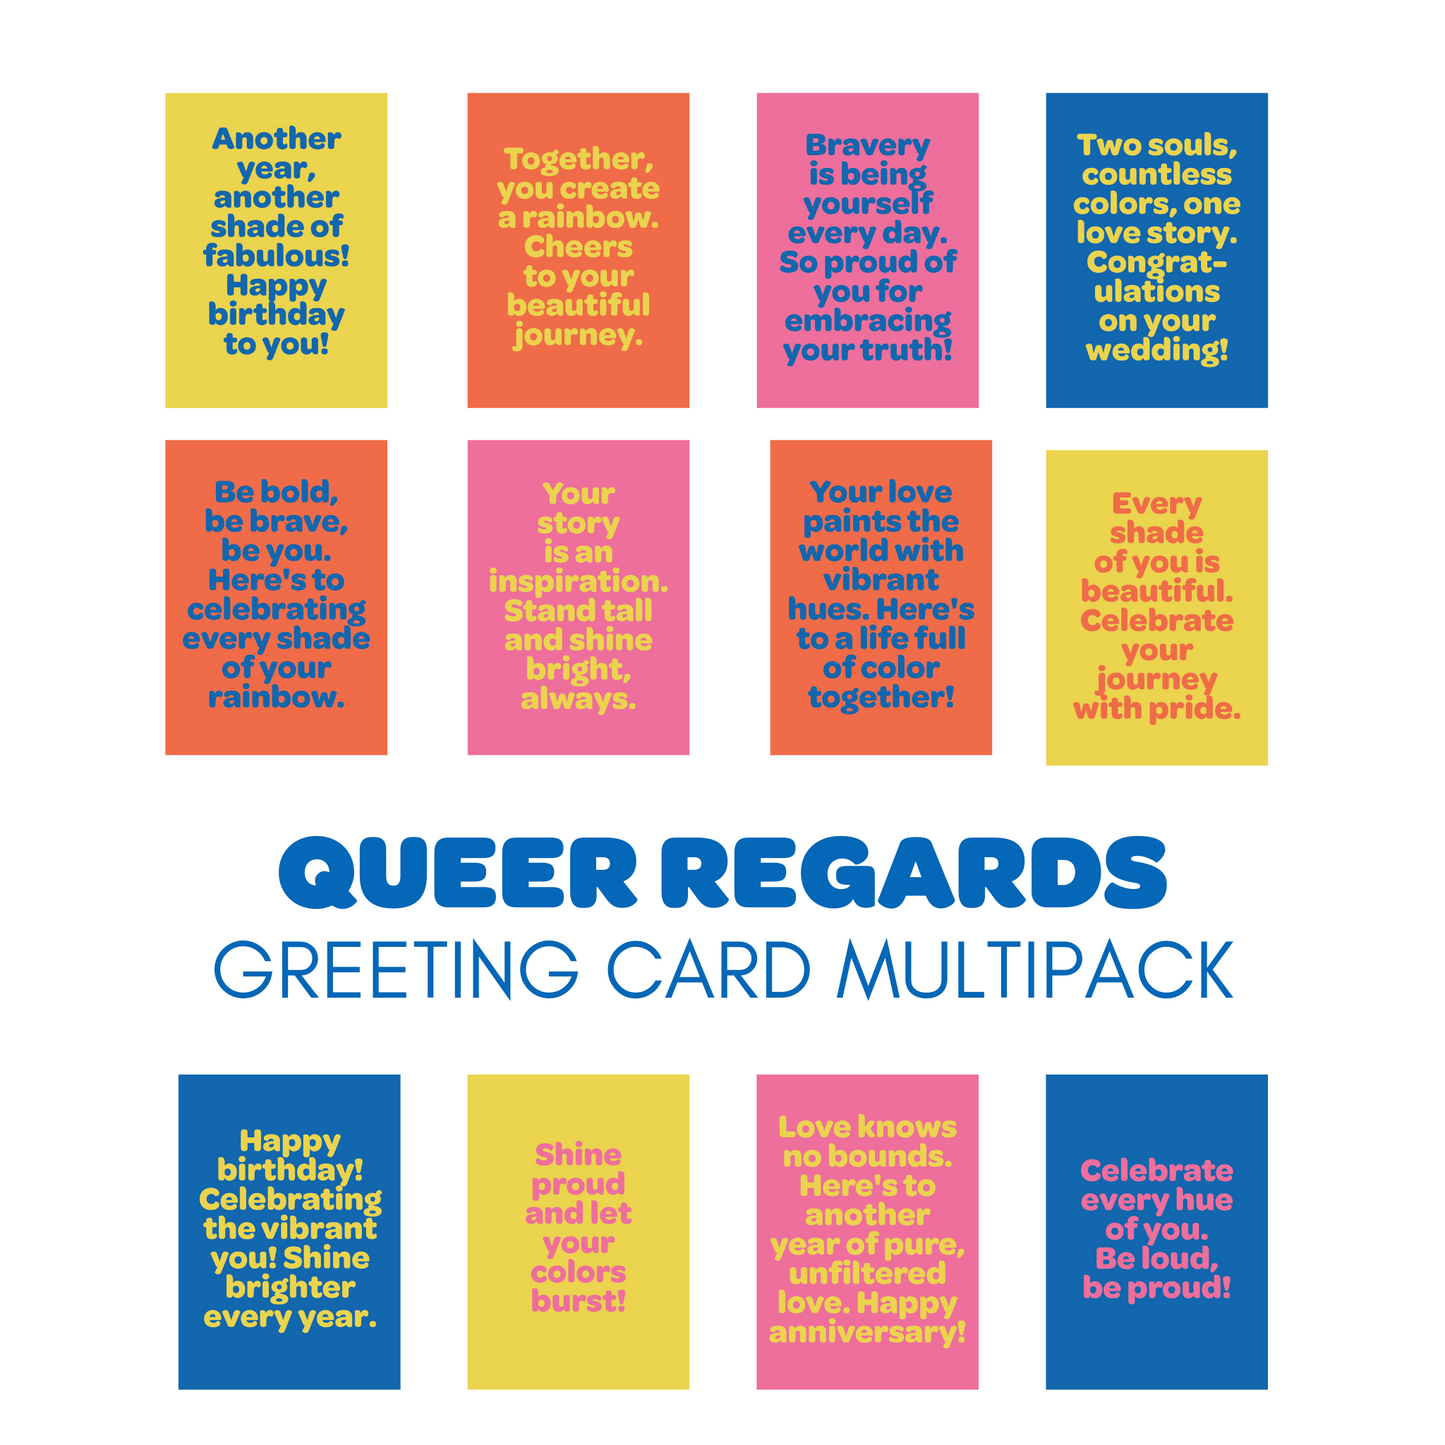 Queer Requards Card Multipack